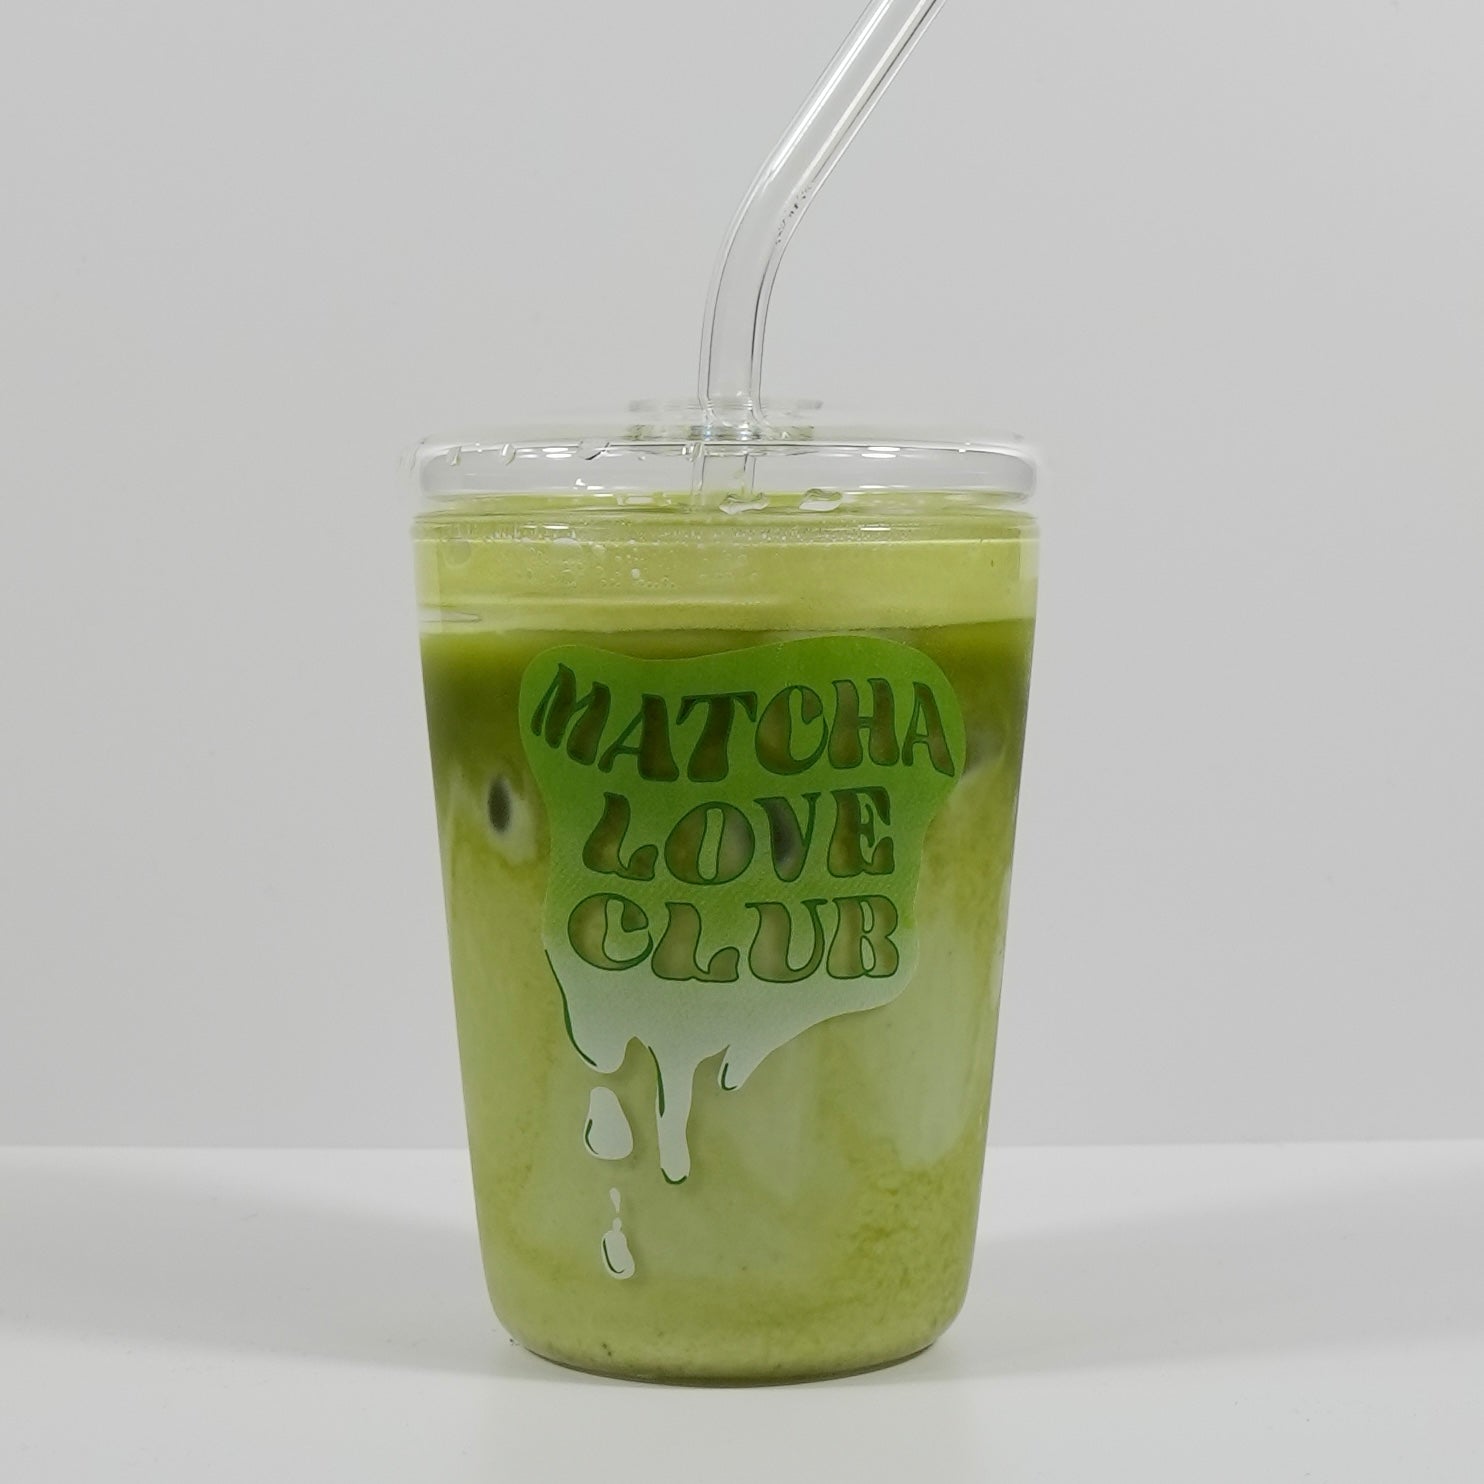 I love you so matcha Glass Cup, Straw & Lid – Oh Matcha